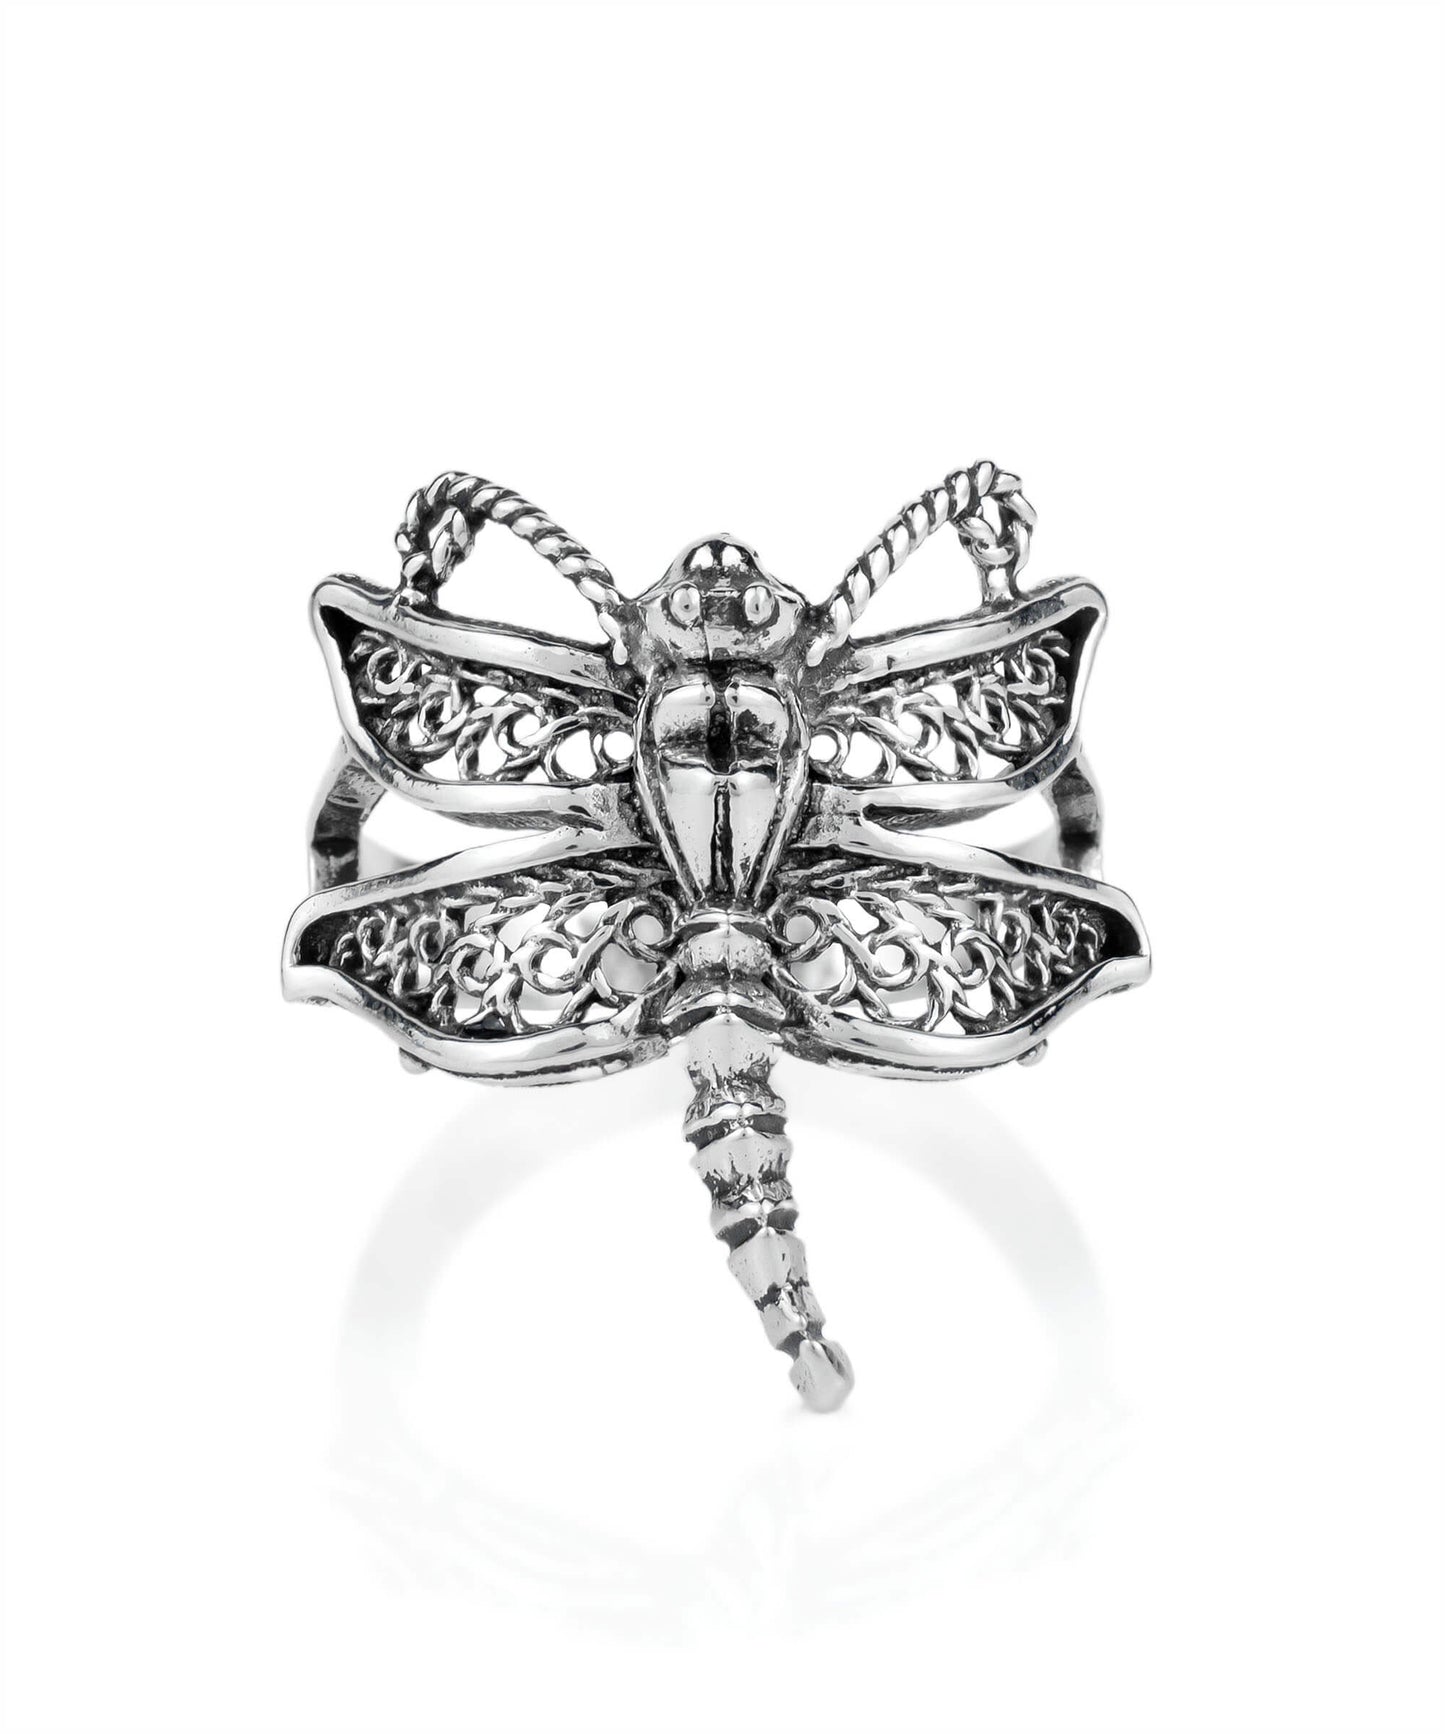 Filigree Art Dragonfly Design Women Silver Cocktail Ring